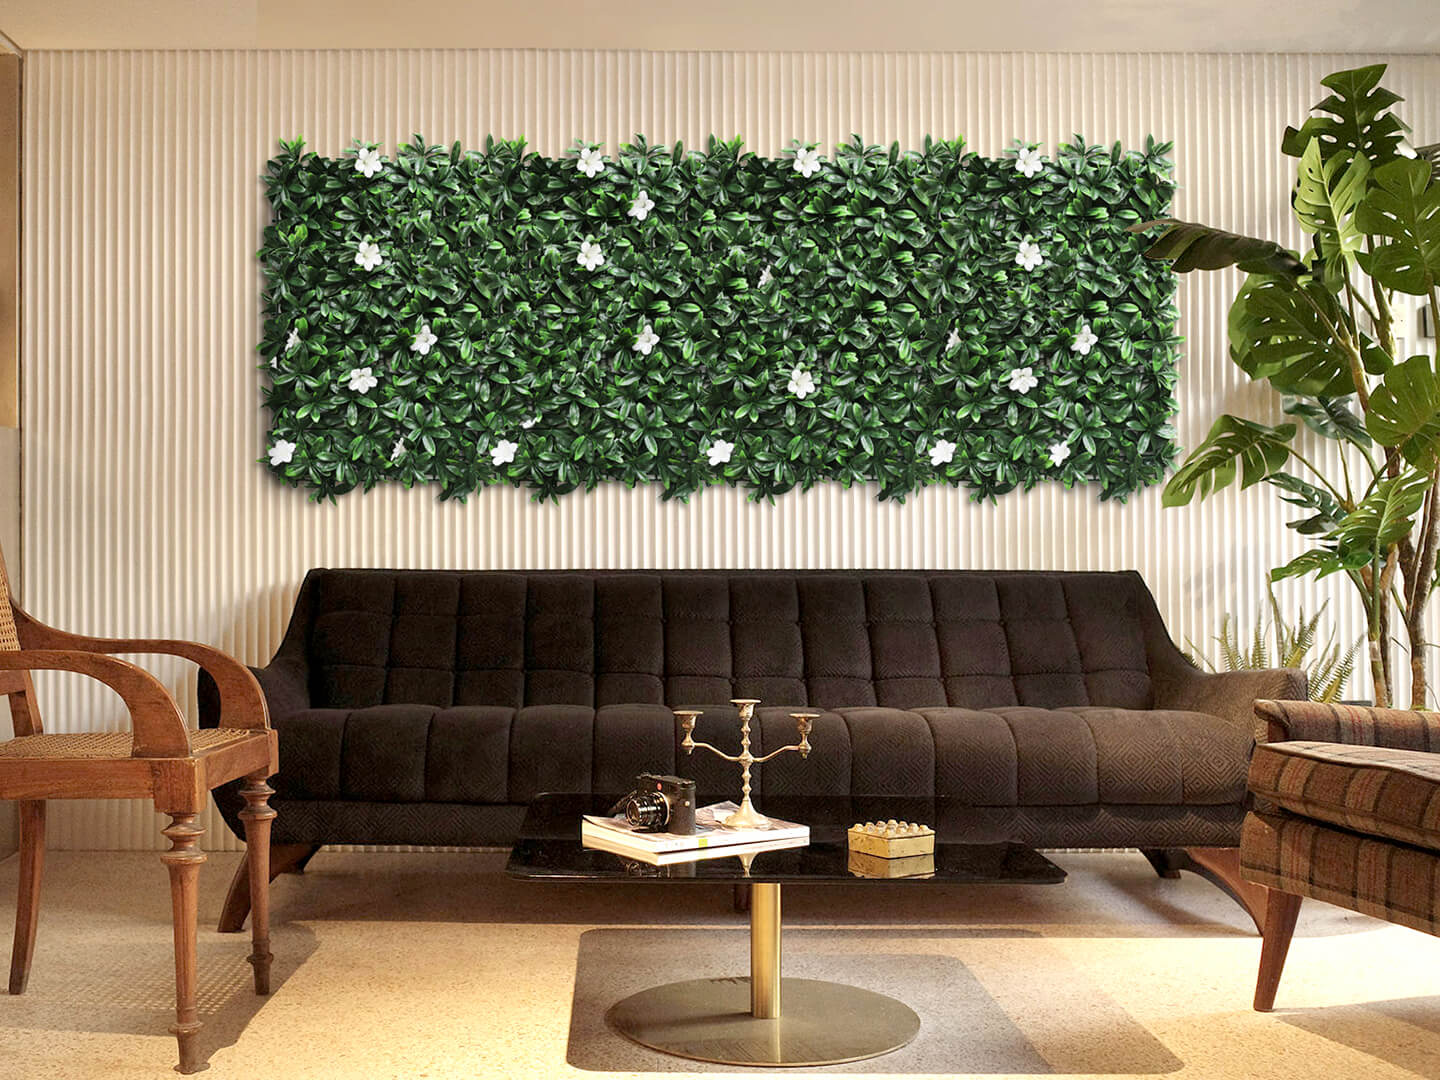 Artificial Plant Wall For Interior Design - EdenVert